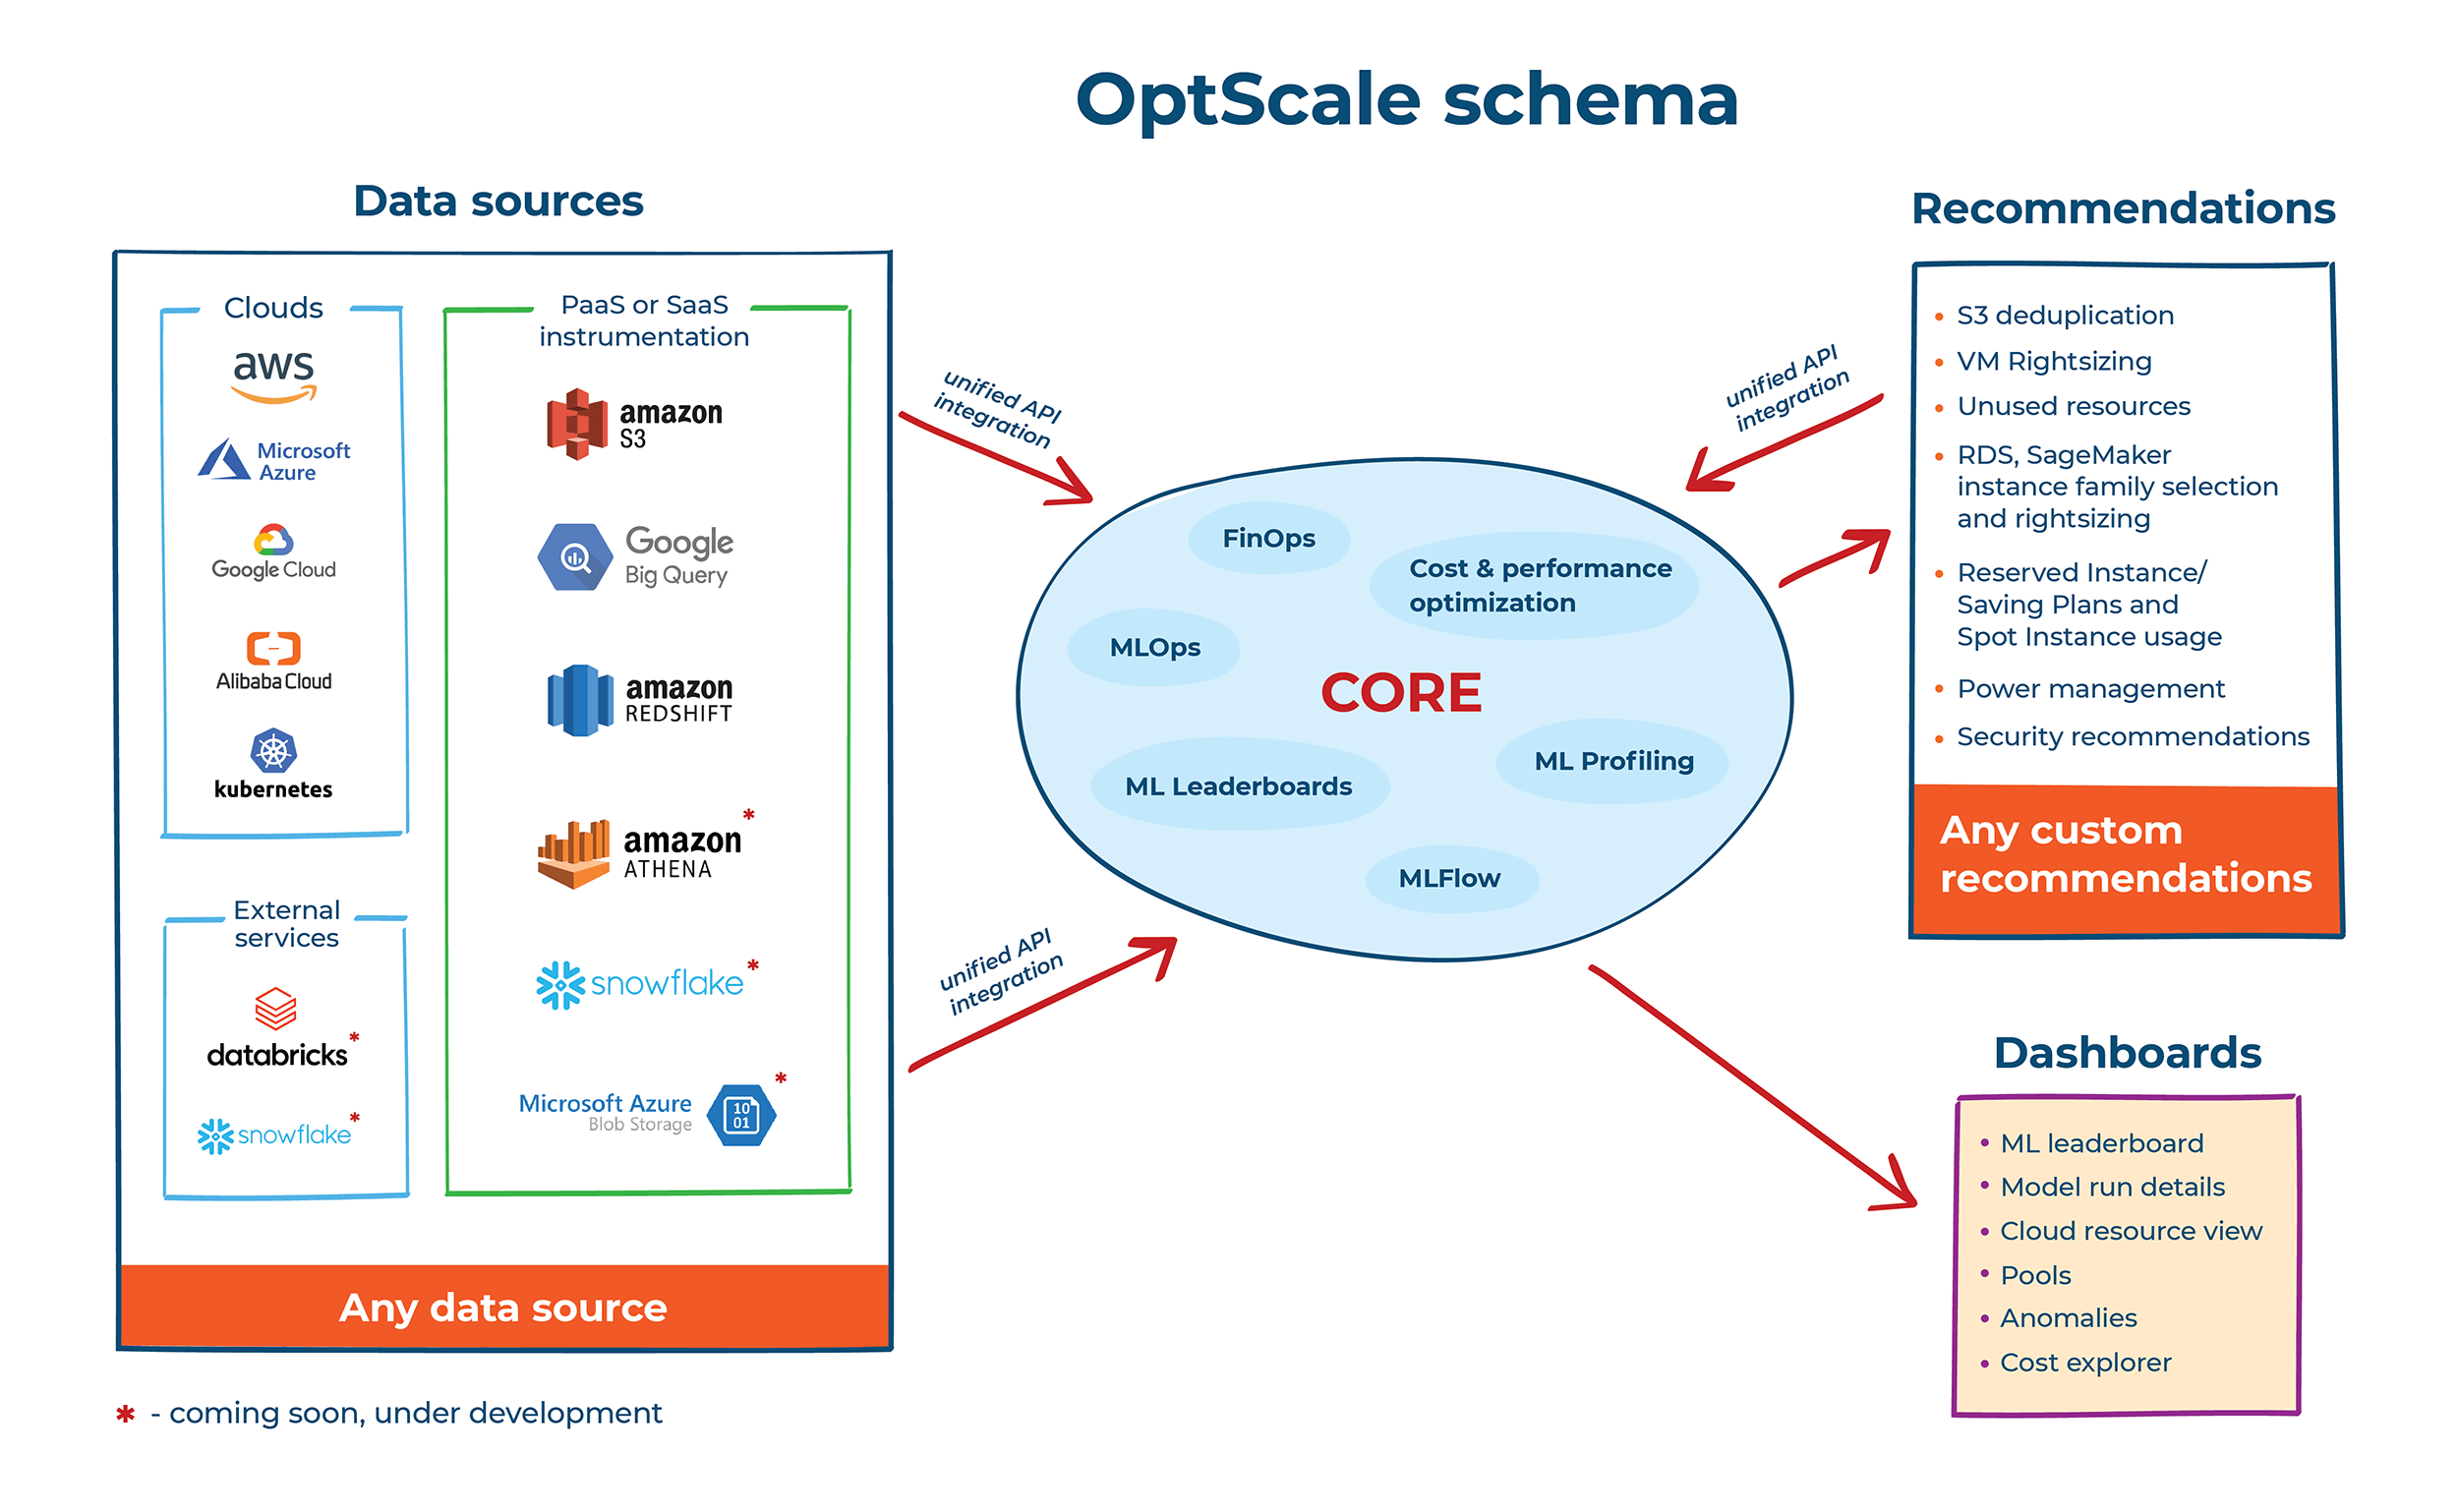 OptScale MLOps and FinOps schema